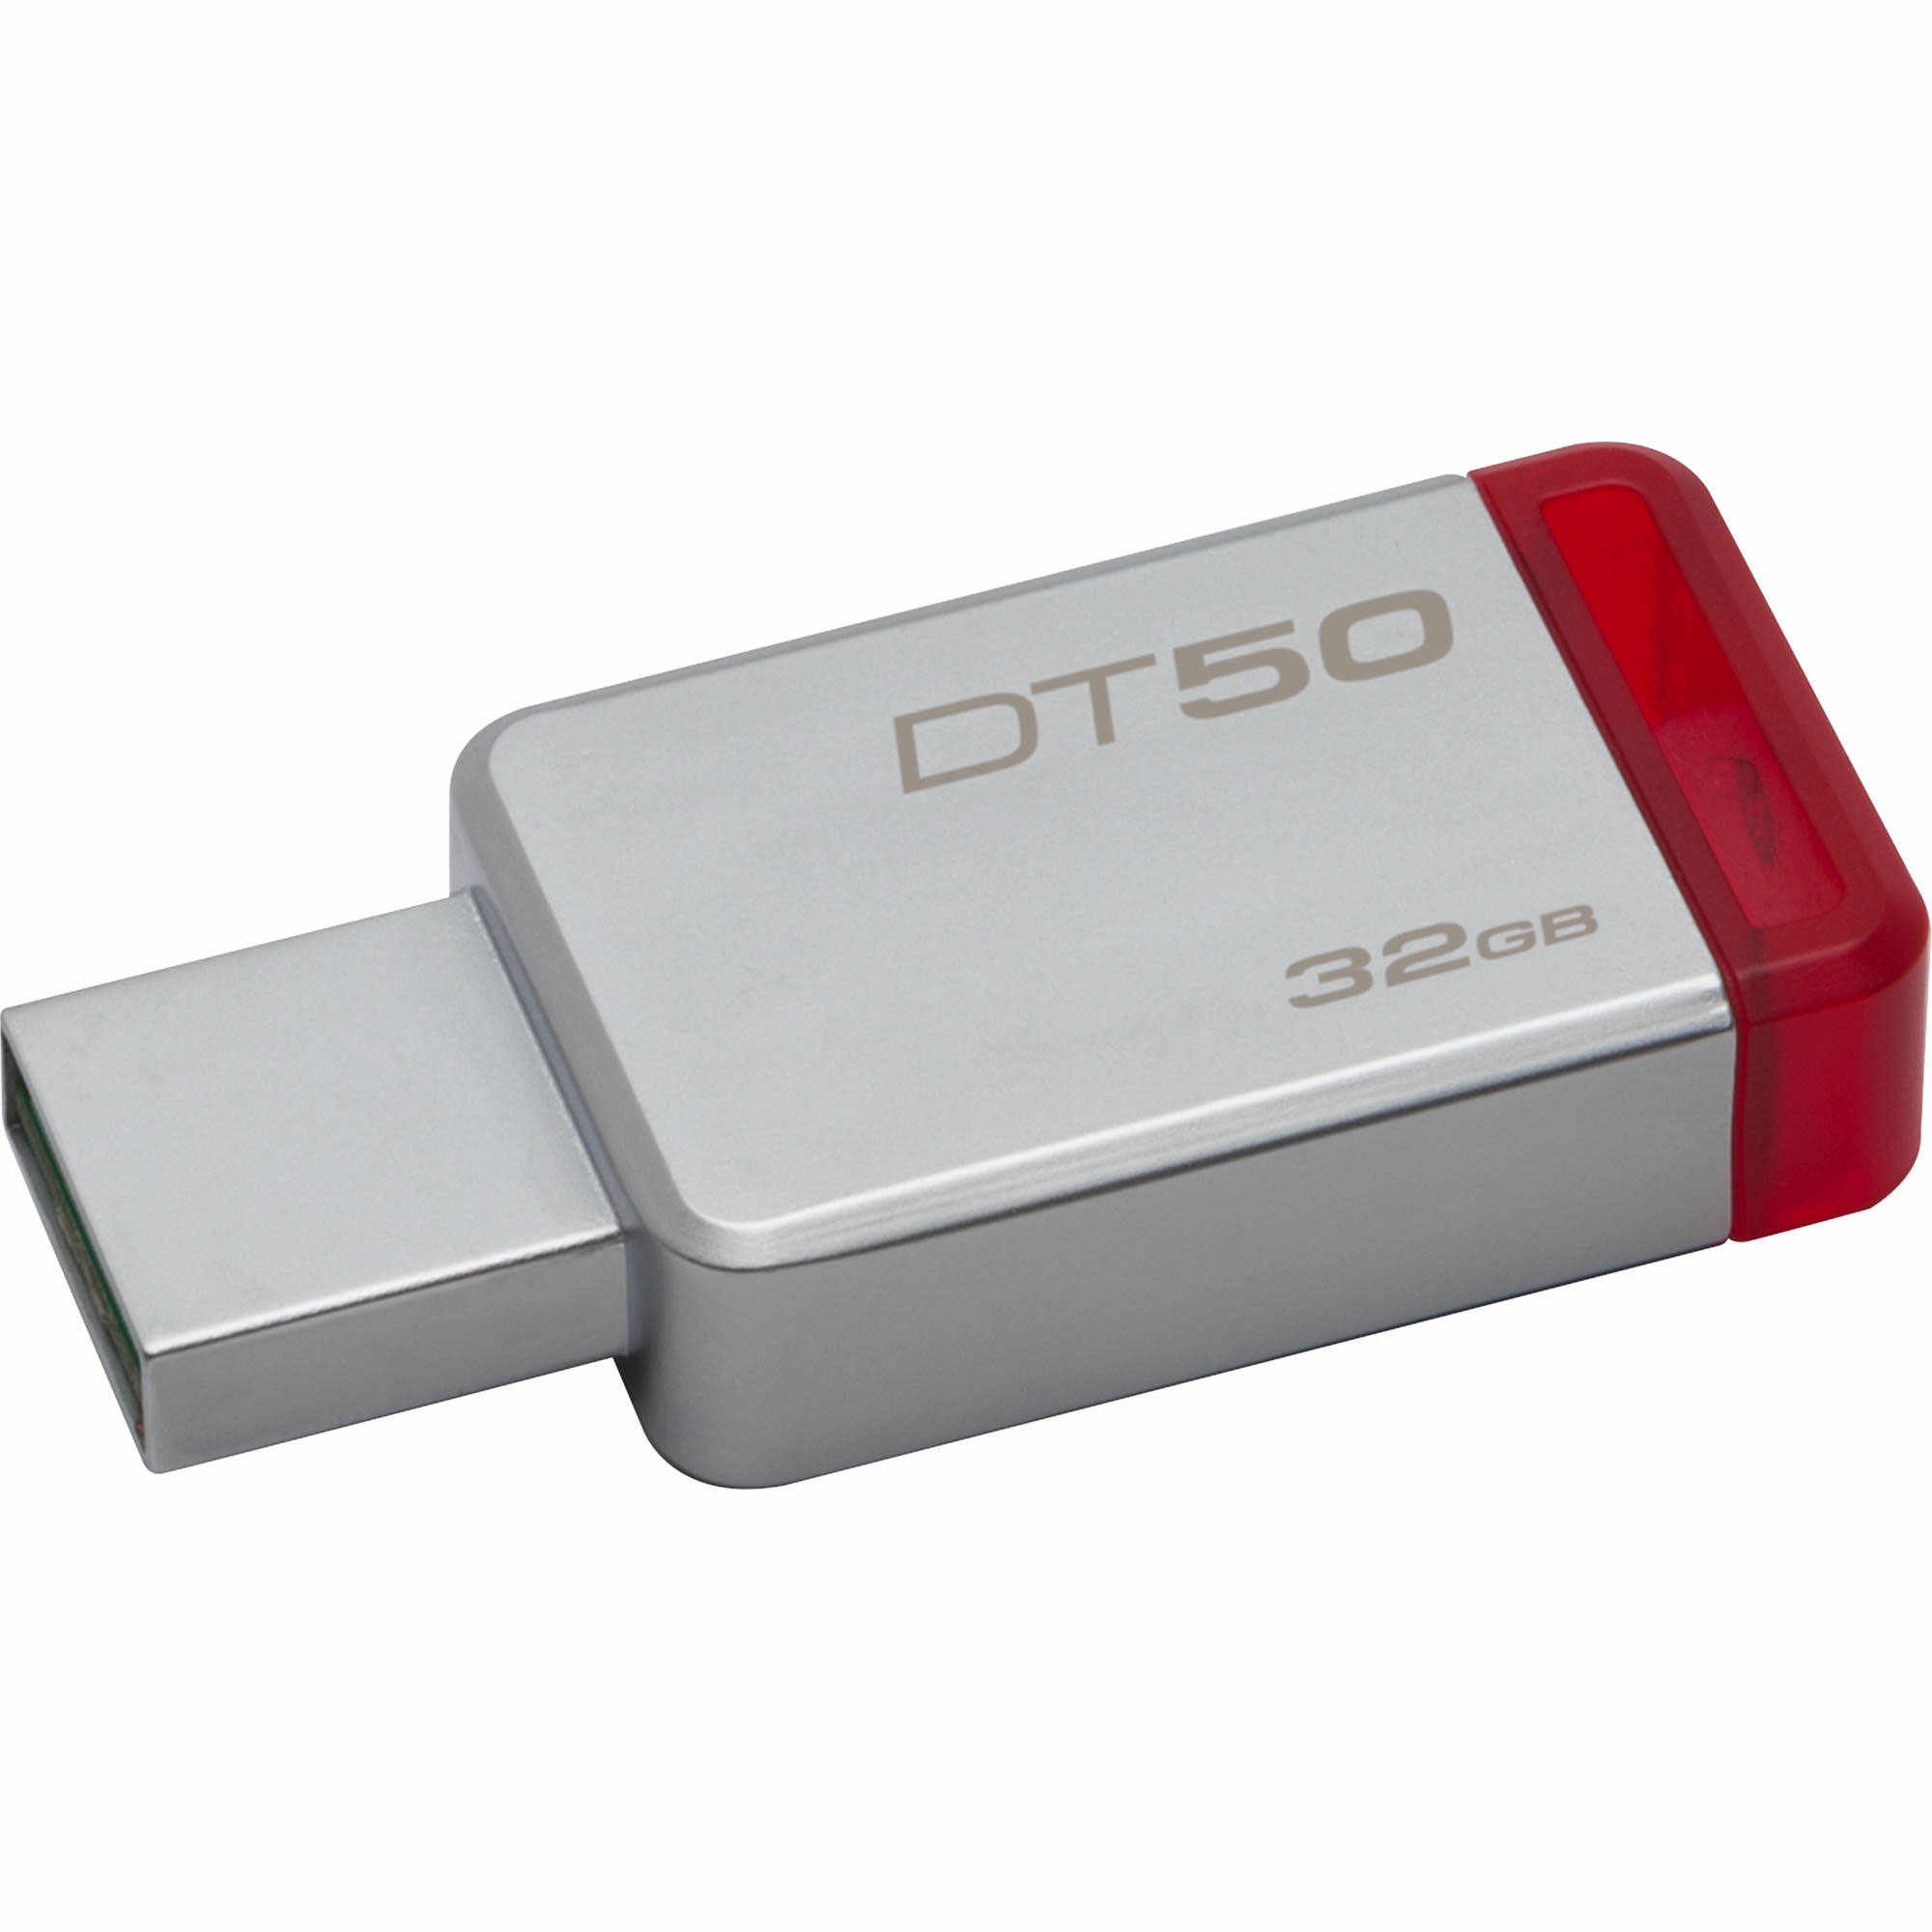 Memorie USB Kingston DT50/32GB, 32GB, USB 3.0, Gri